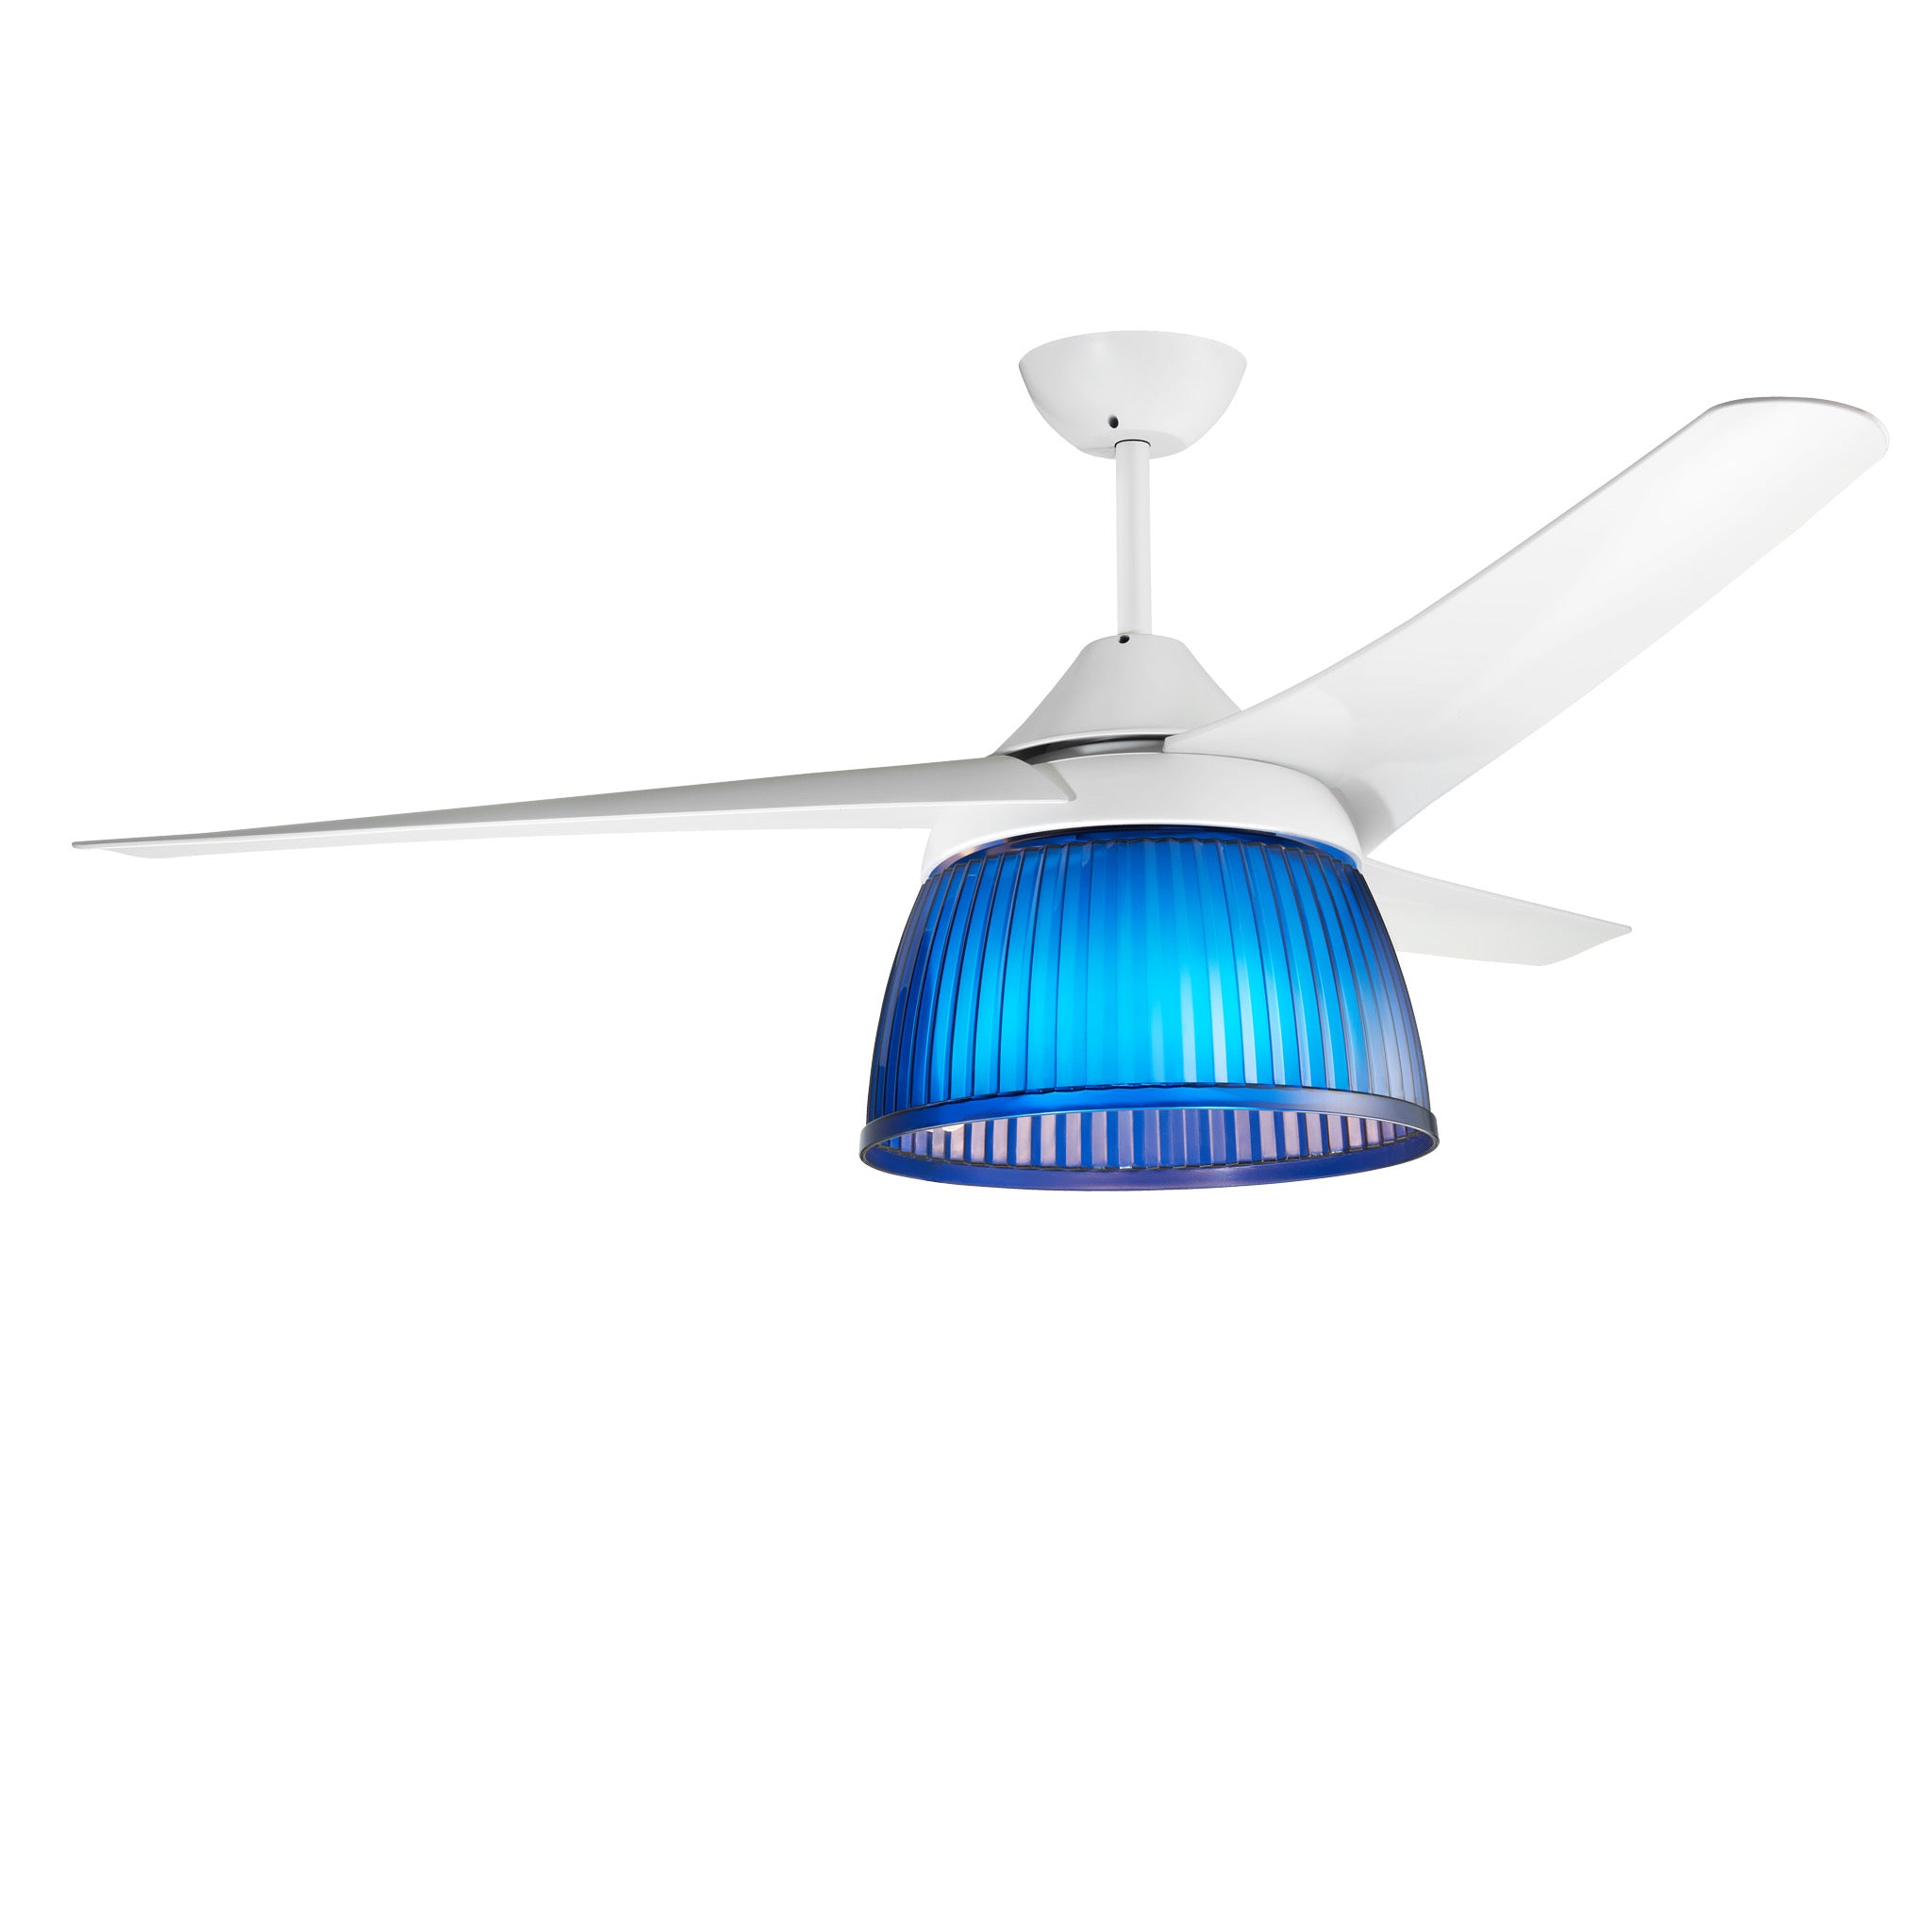 Prifix Jumbo ceiling fan with lighting NO REMOTE